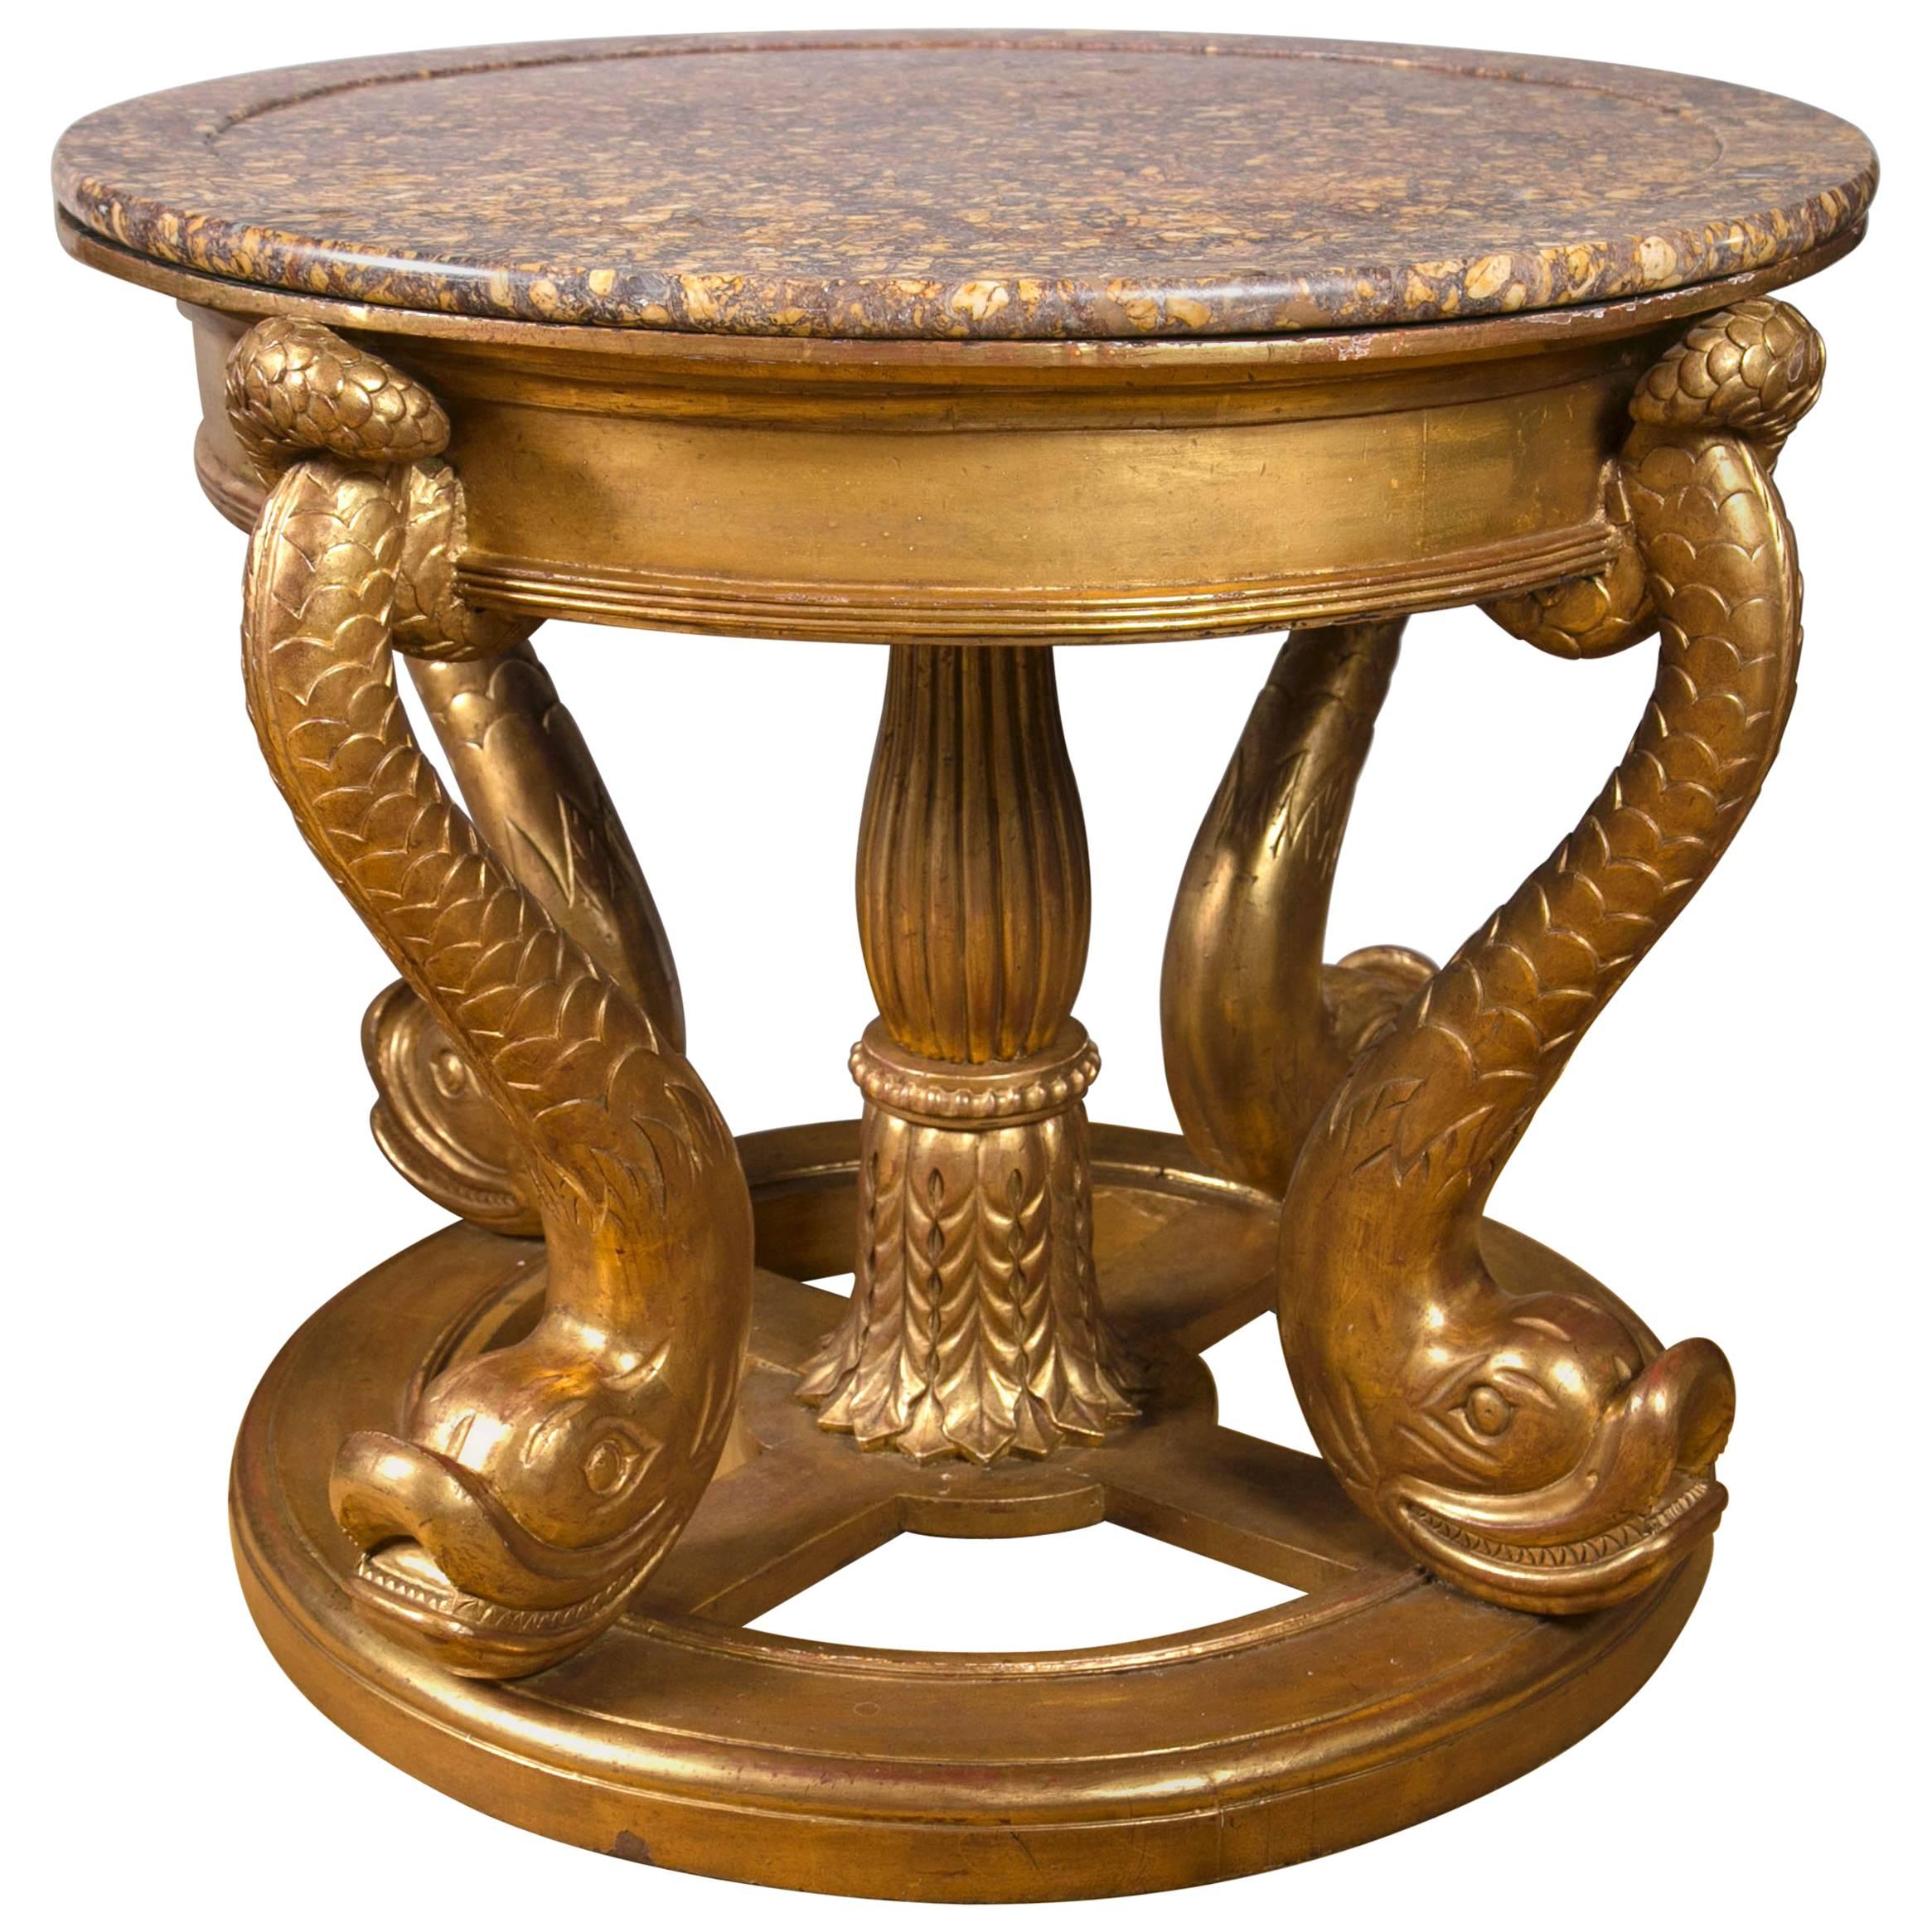 Early 19th Century Italian Giltwood Centre Table